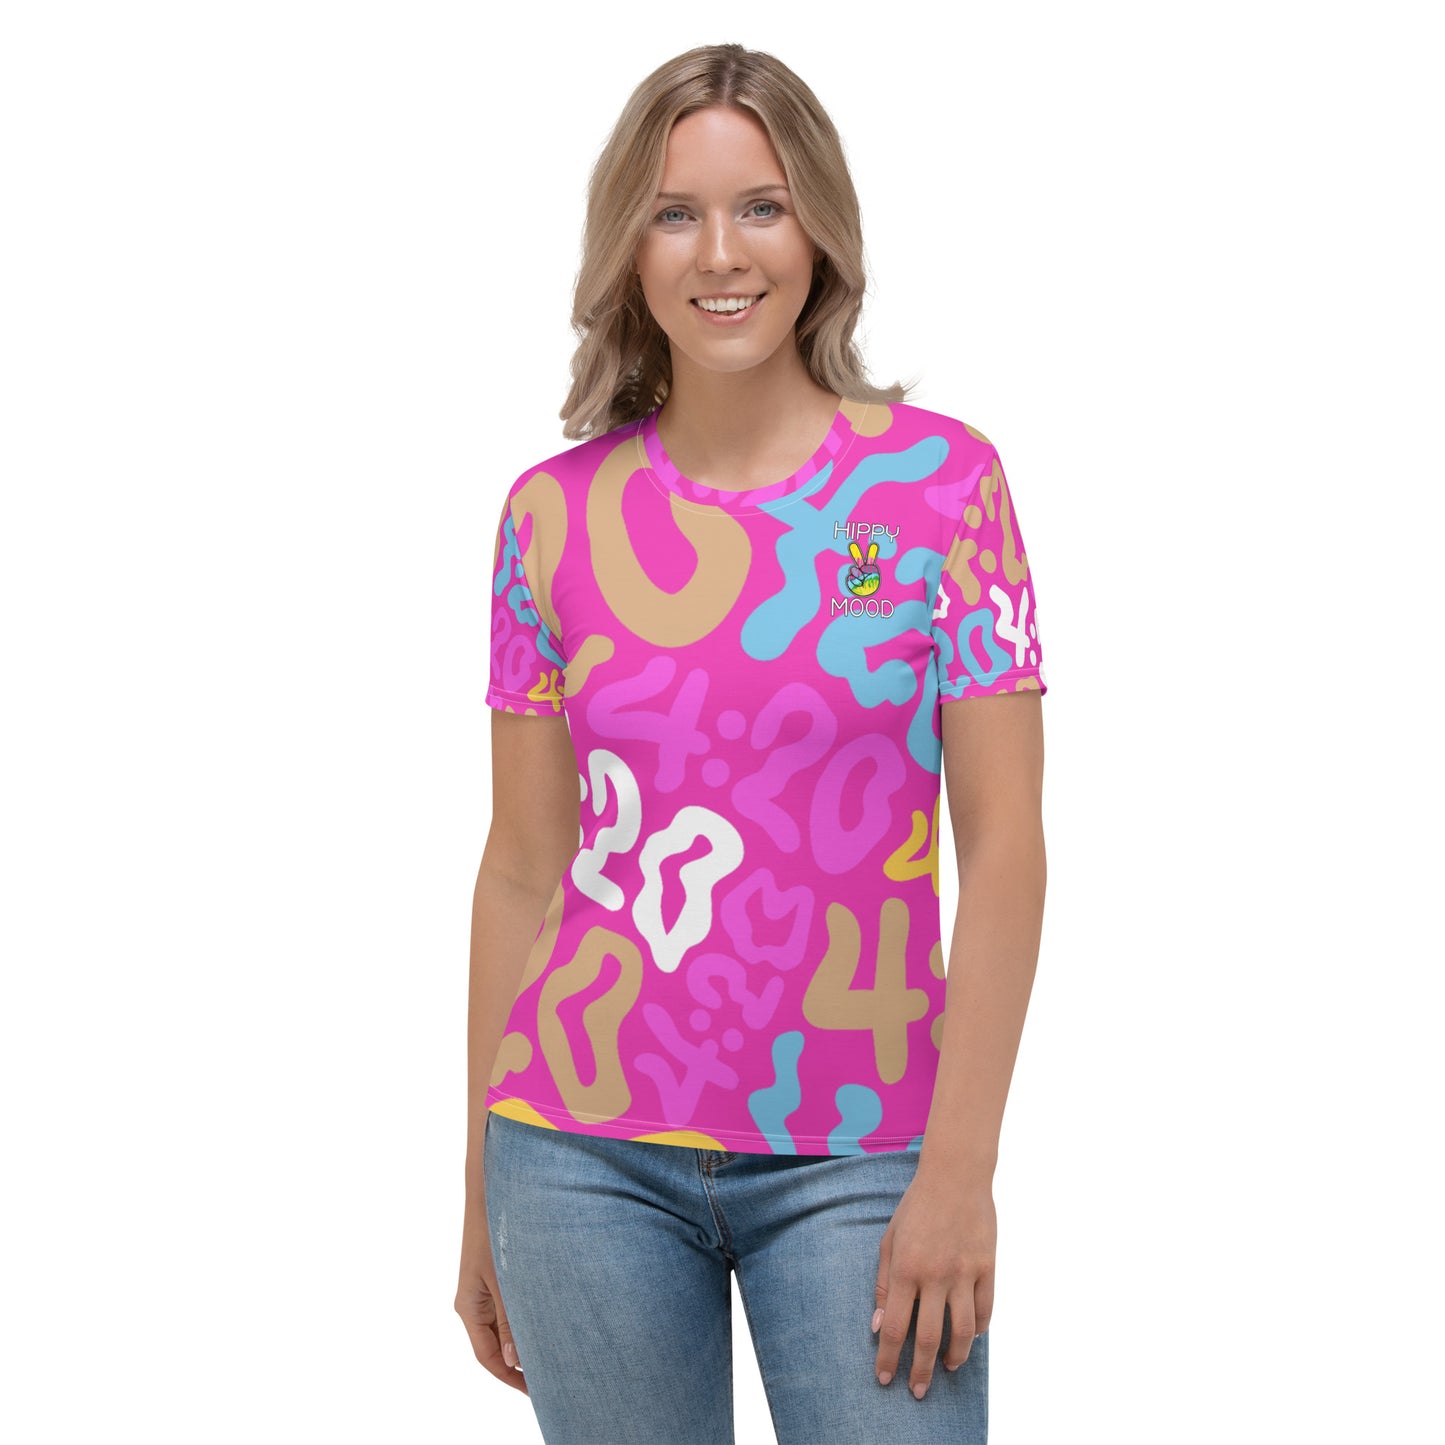 Hippy Mood 420 Women's T-shirt